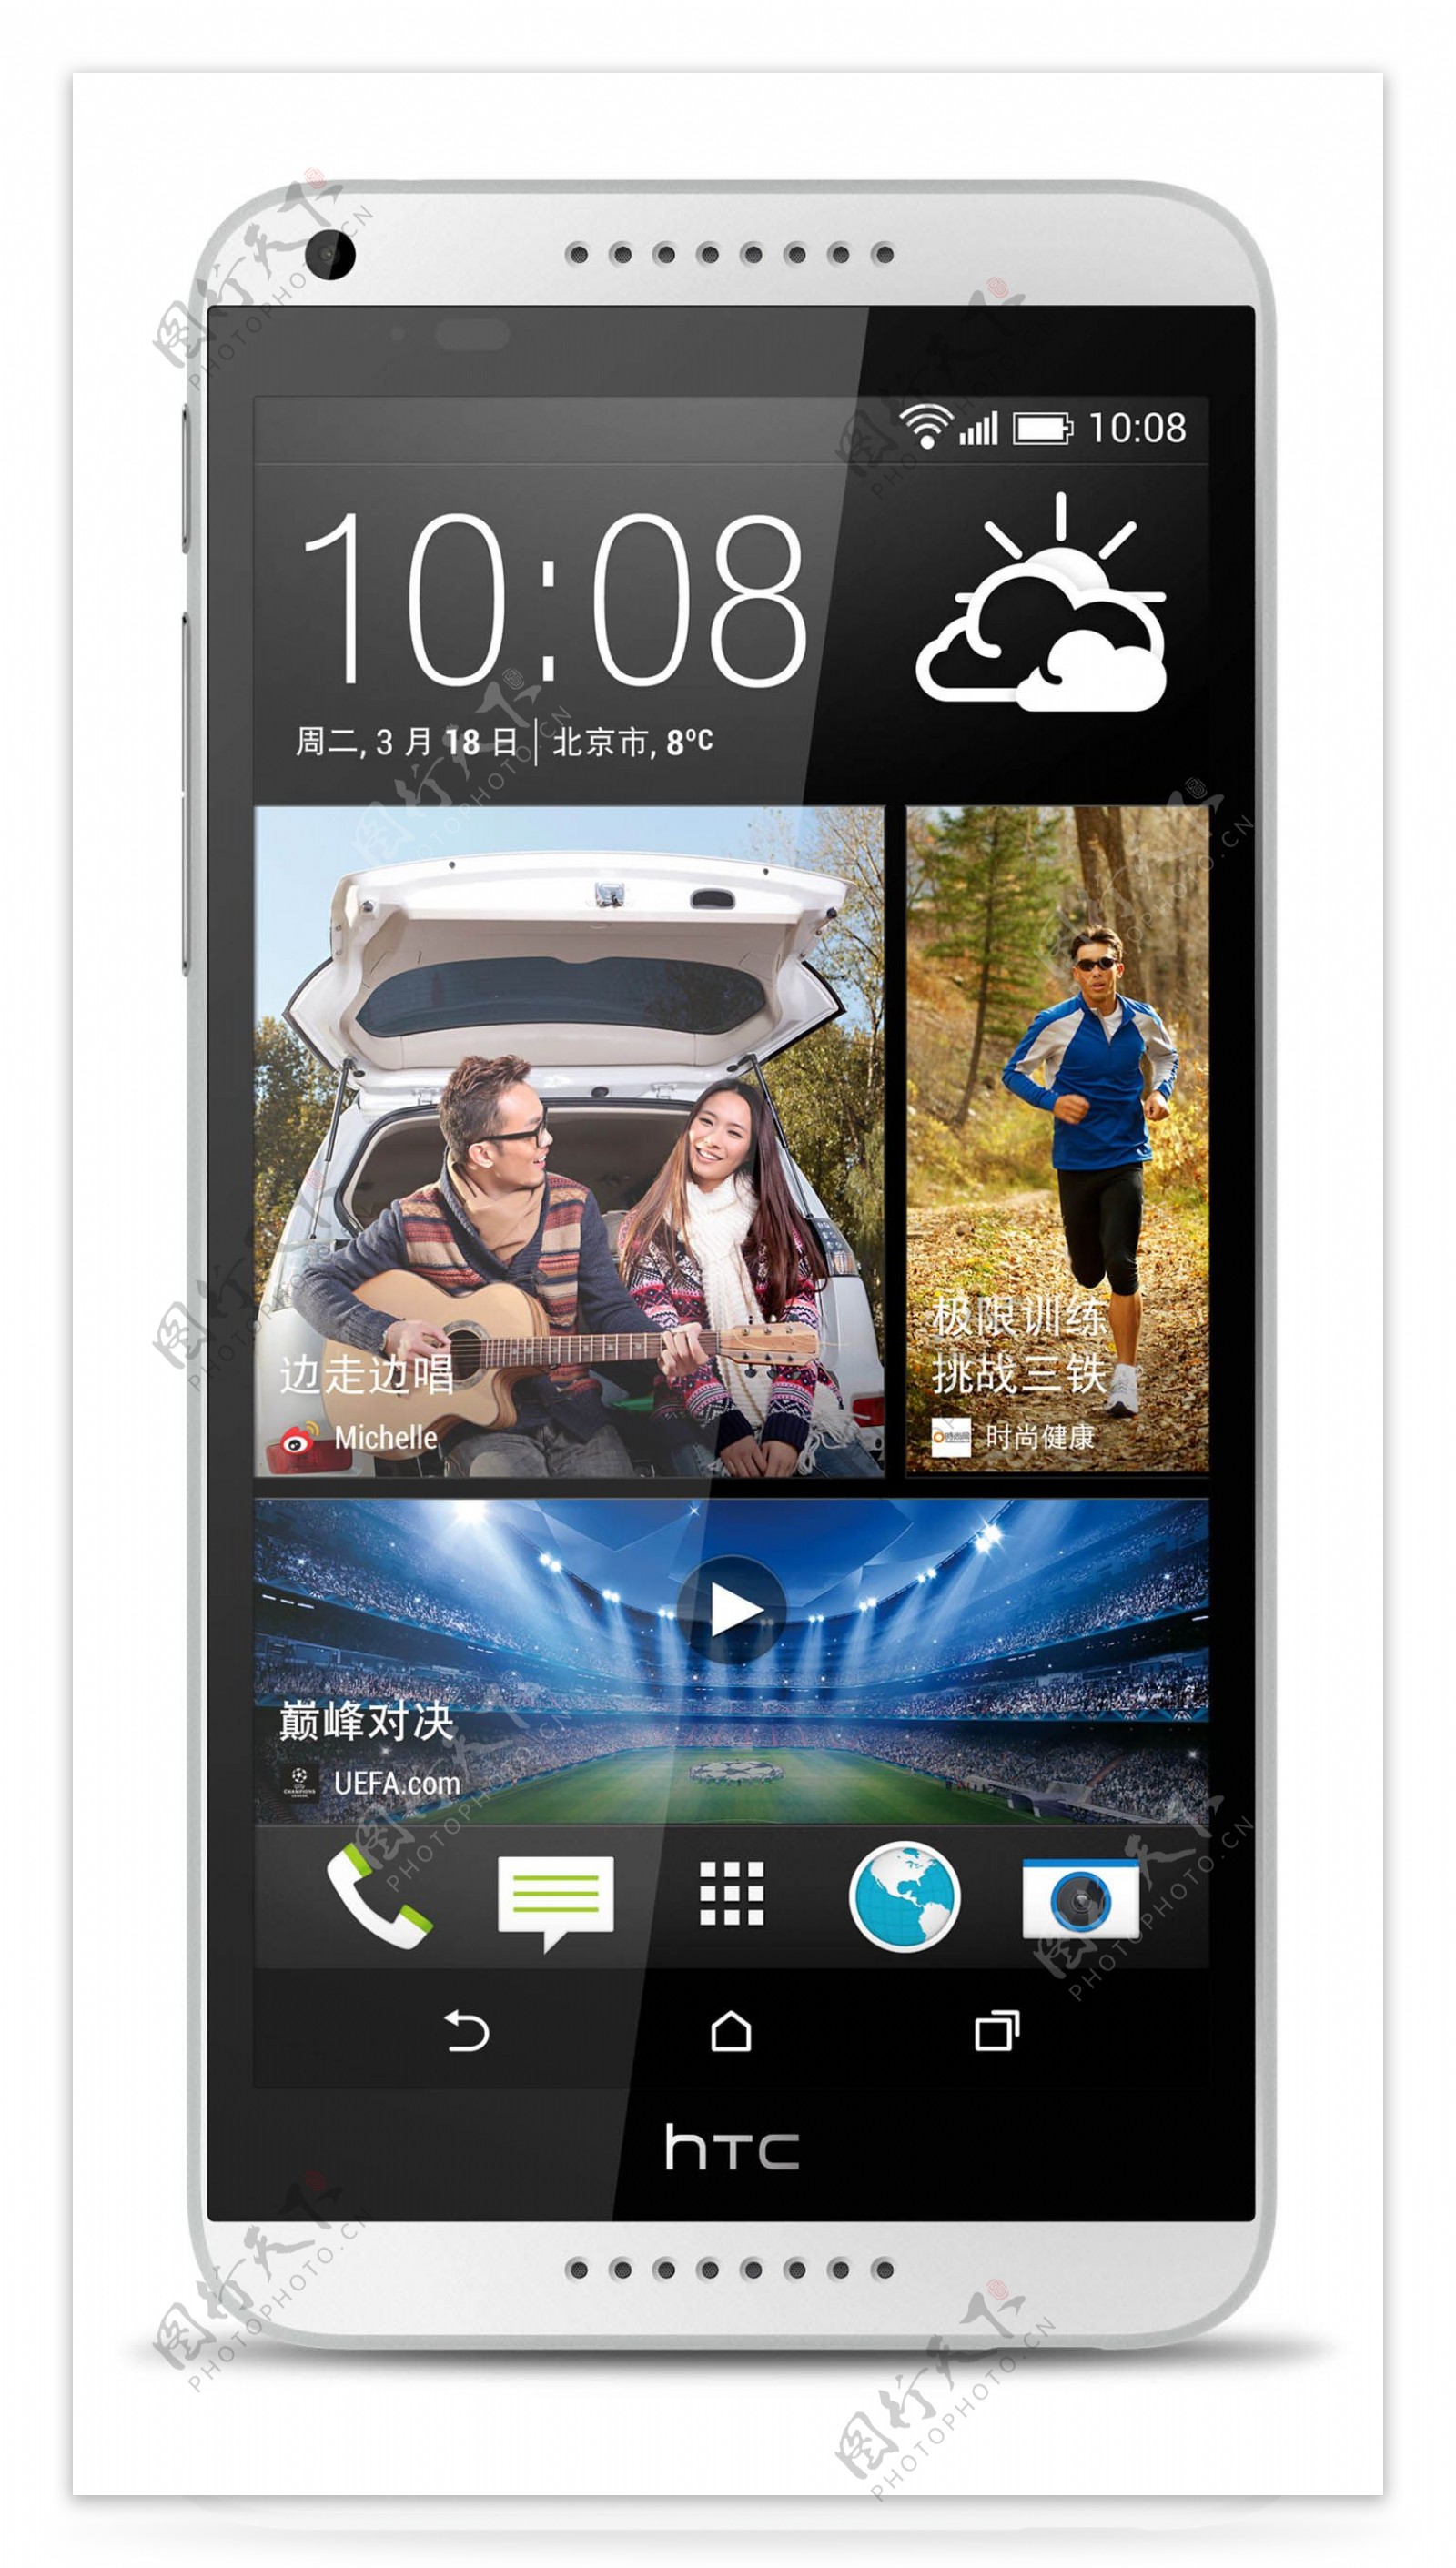 【HTC G8】HTC Wildfire参数、报价、图片_HTC G8最新报价_太平洋产品报价